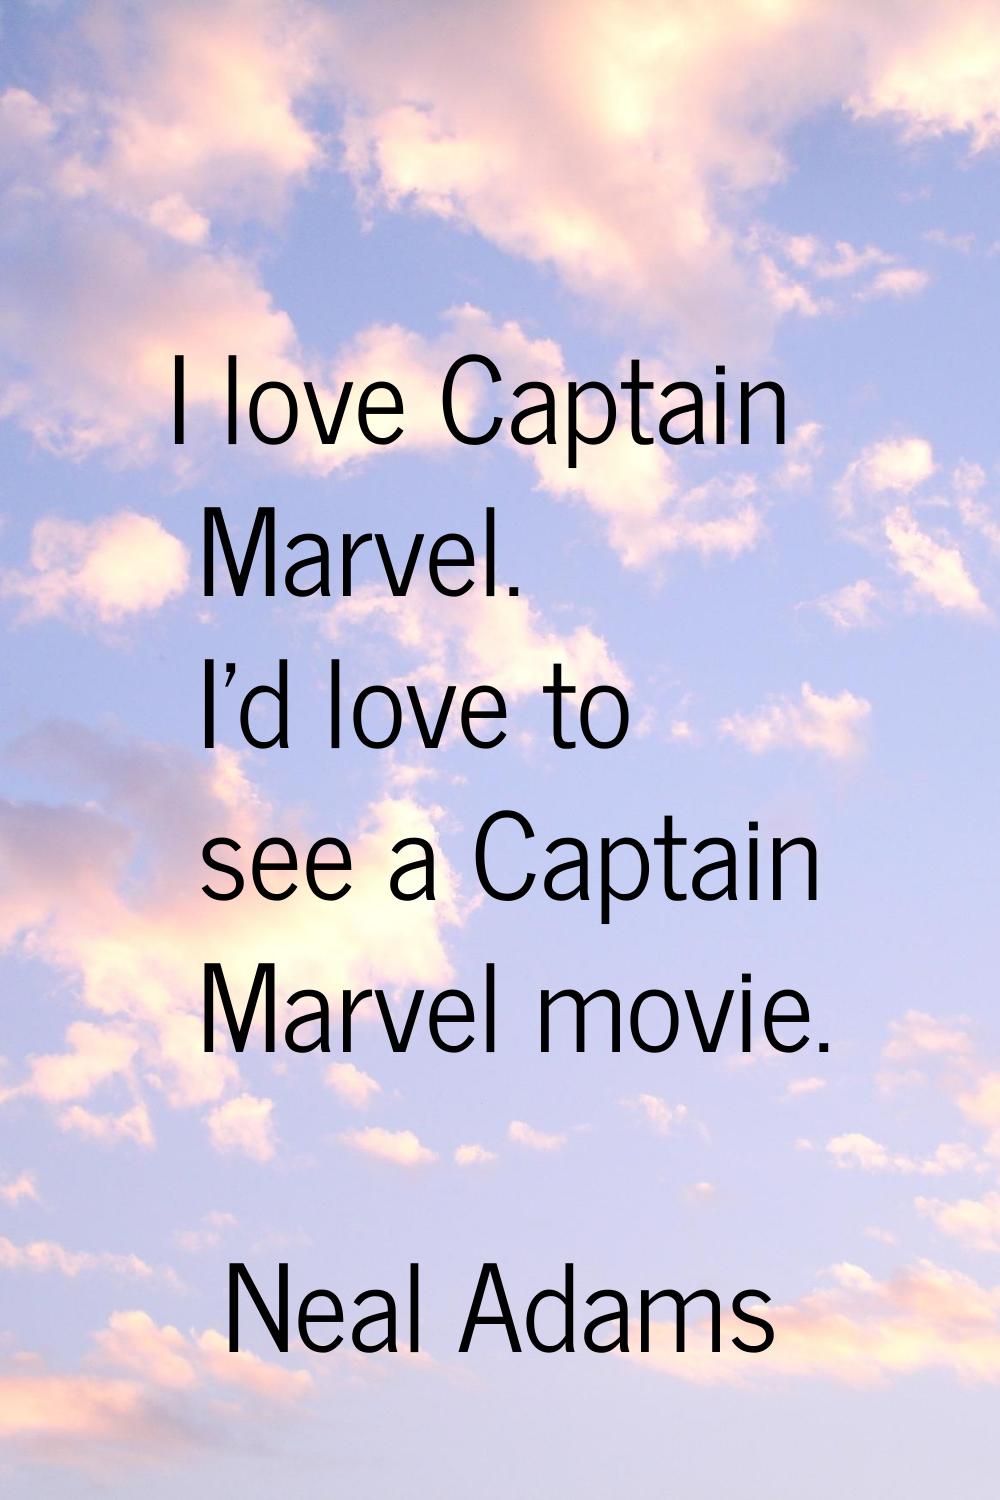 I love Captain Marvel. I'd love to see a Captain Marvel movie.